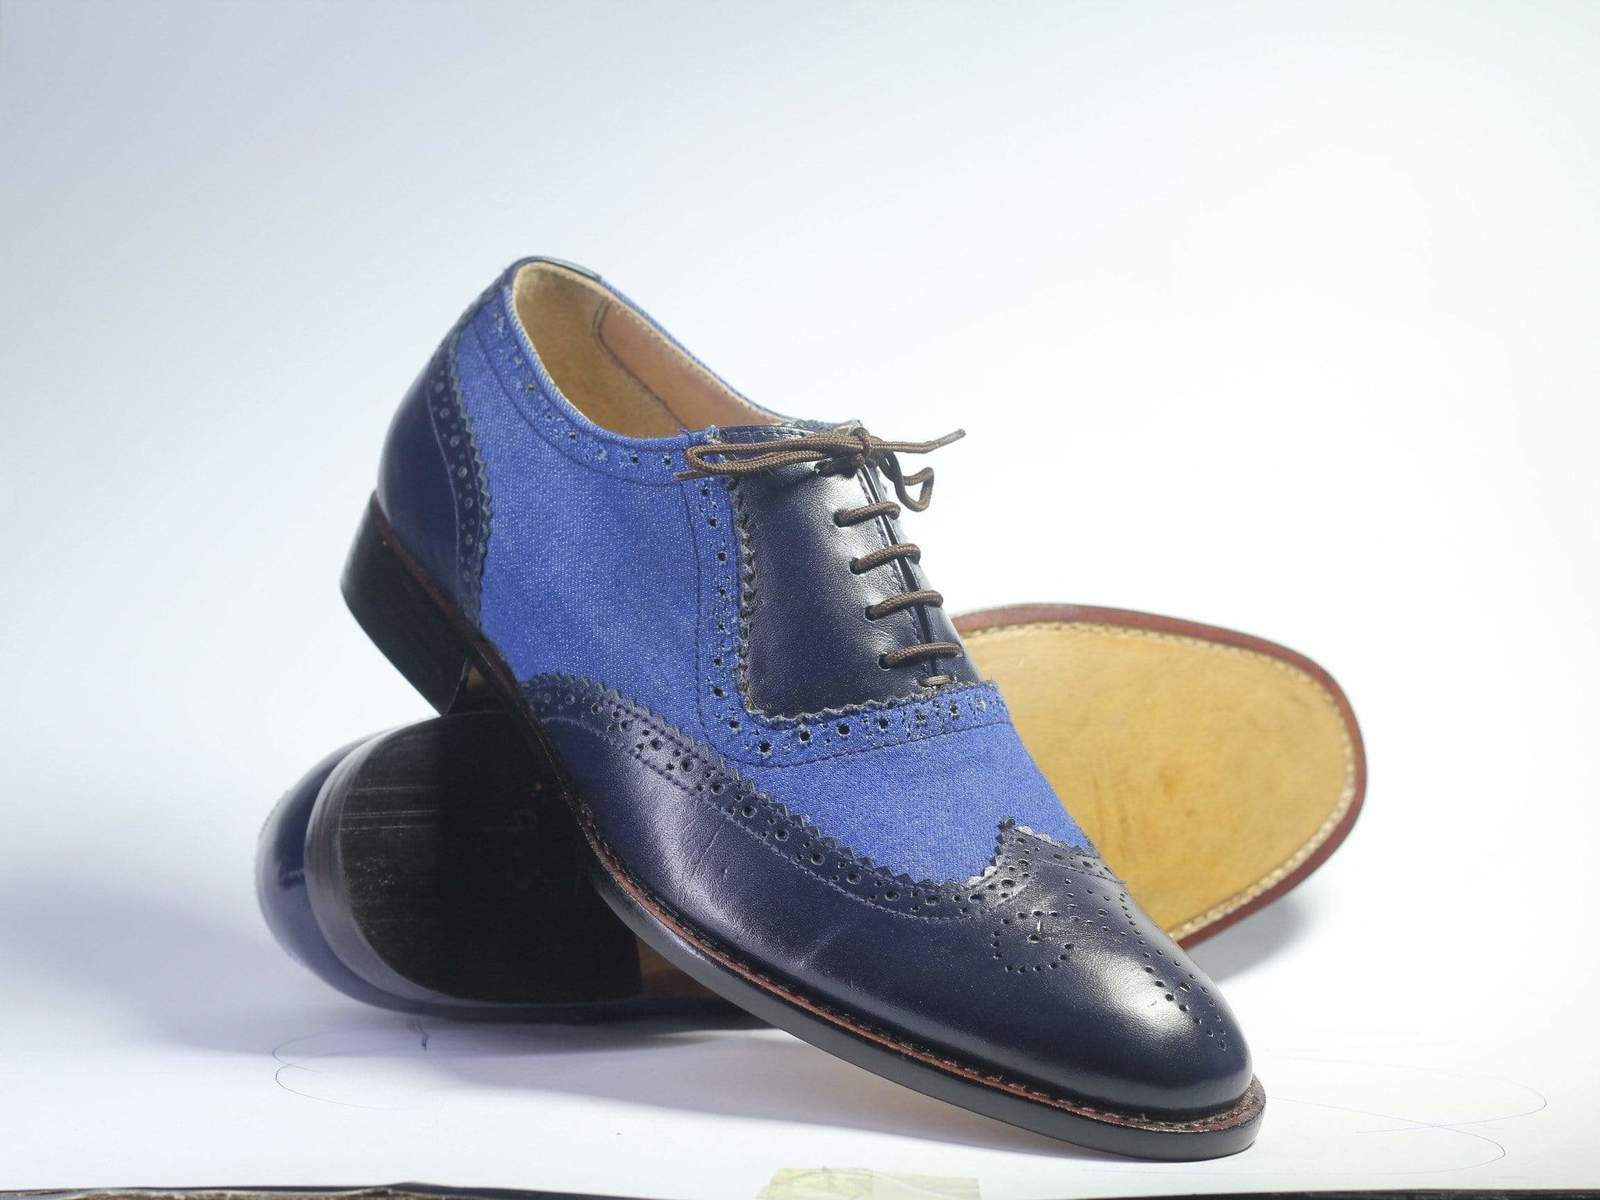 Bespoke Navy Wing Tip Brogue Leather & Denim Shoes for Men's - Dress/Formal